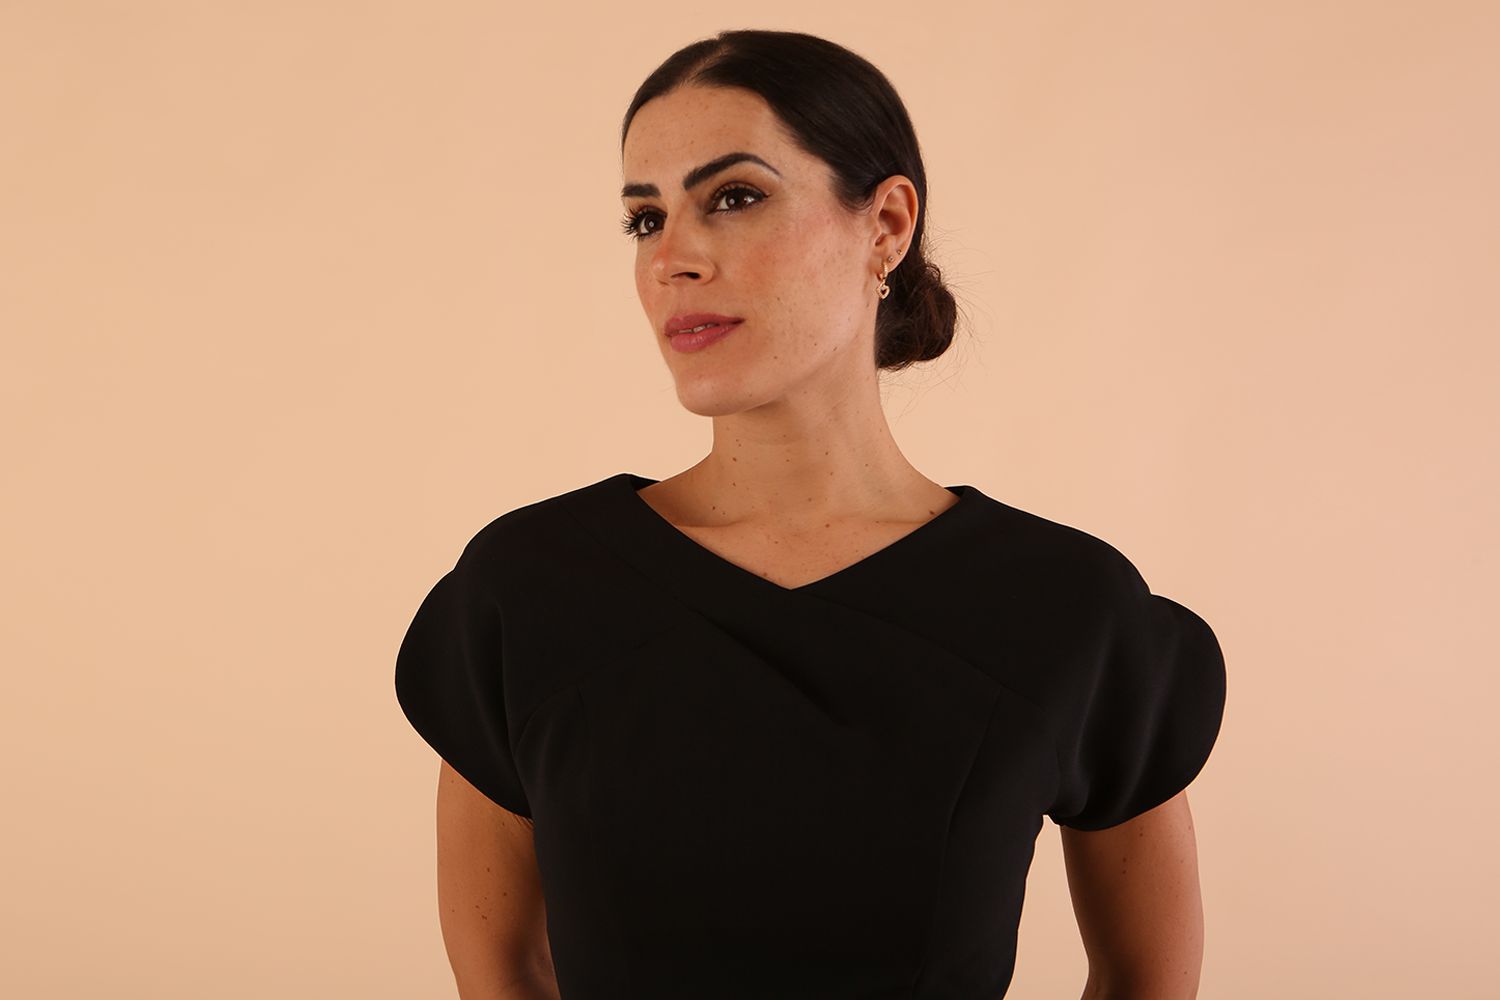 Model wearing a diva catwalk Sheena Short Sleeve with an open split Knee Length Pencil Dress with Diamond Neckline in Black colour